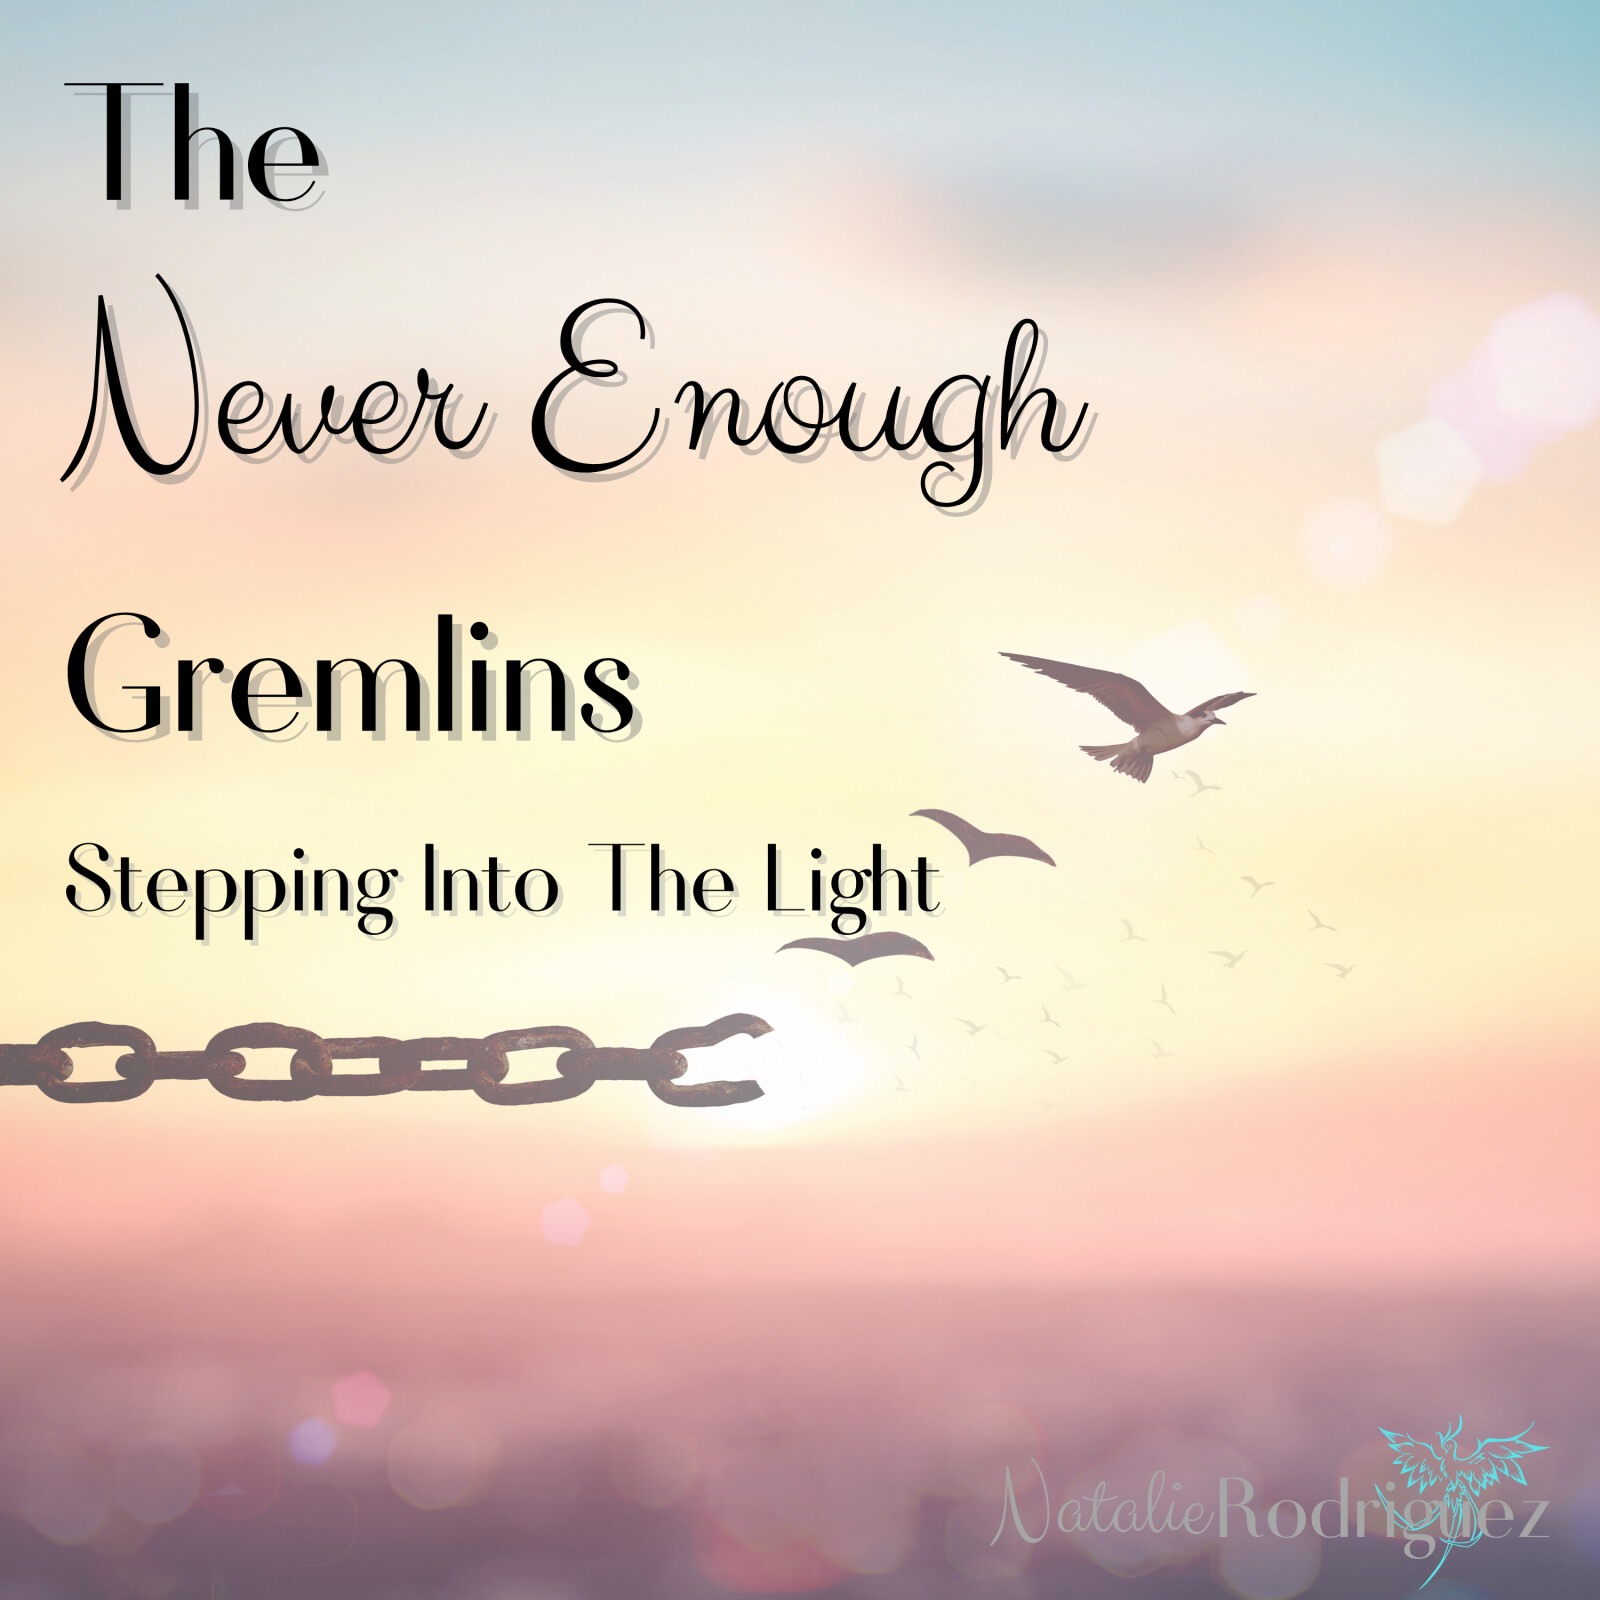 The "Never Enough" Gremlins